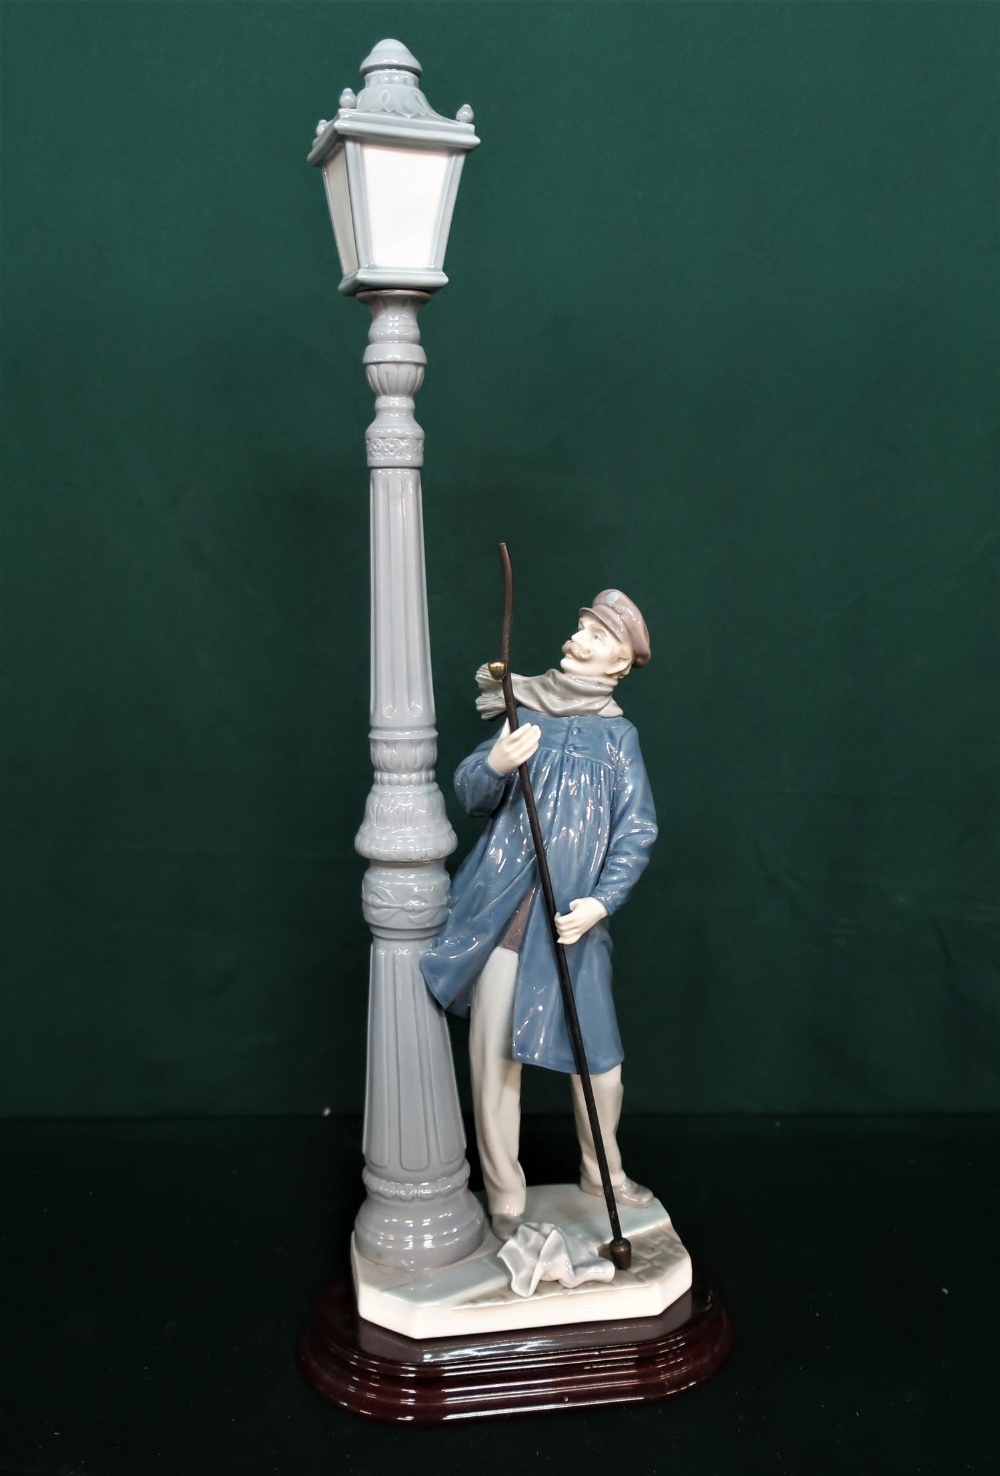 Lladro figurine 5205 "El Farolero" in original box. H50cm, including base. (A/F)